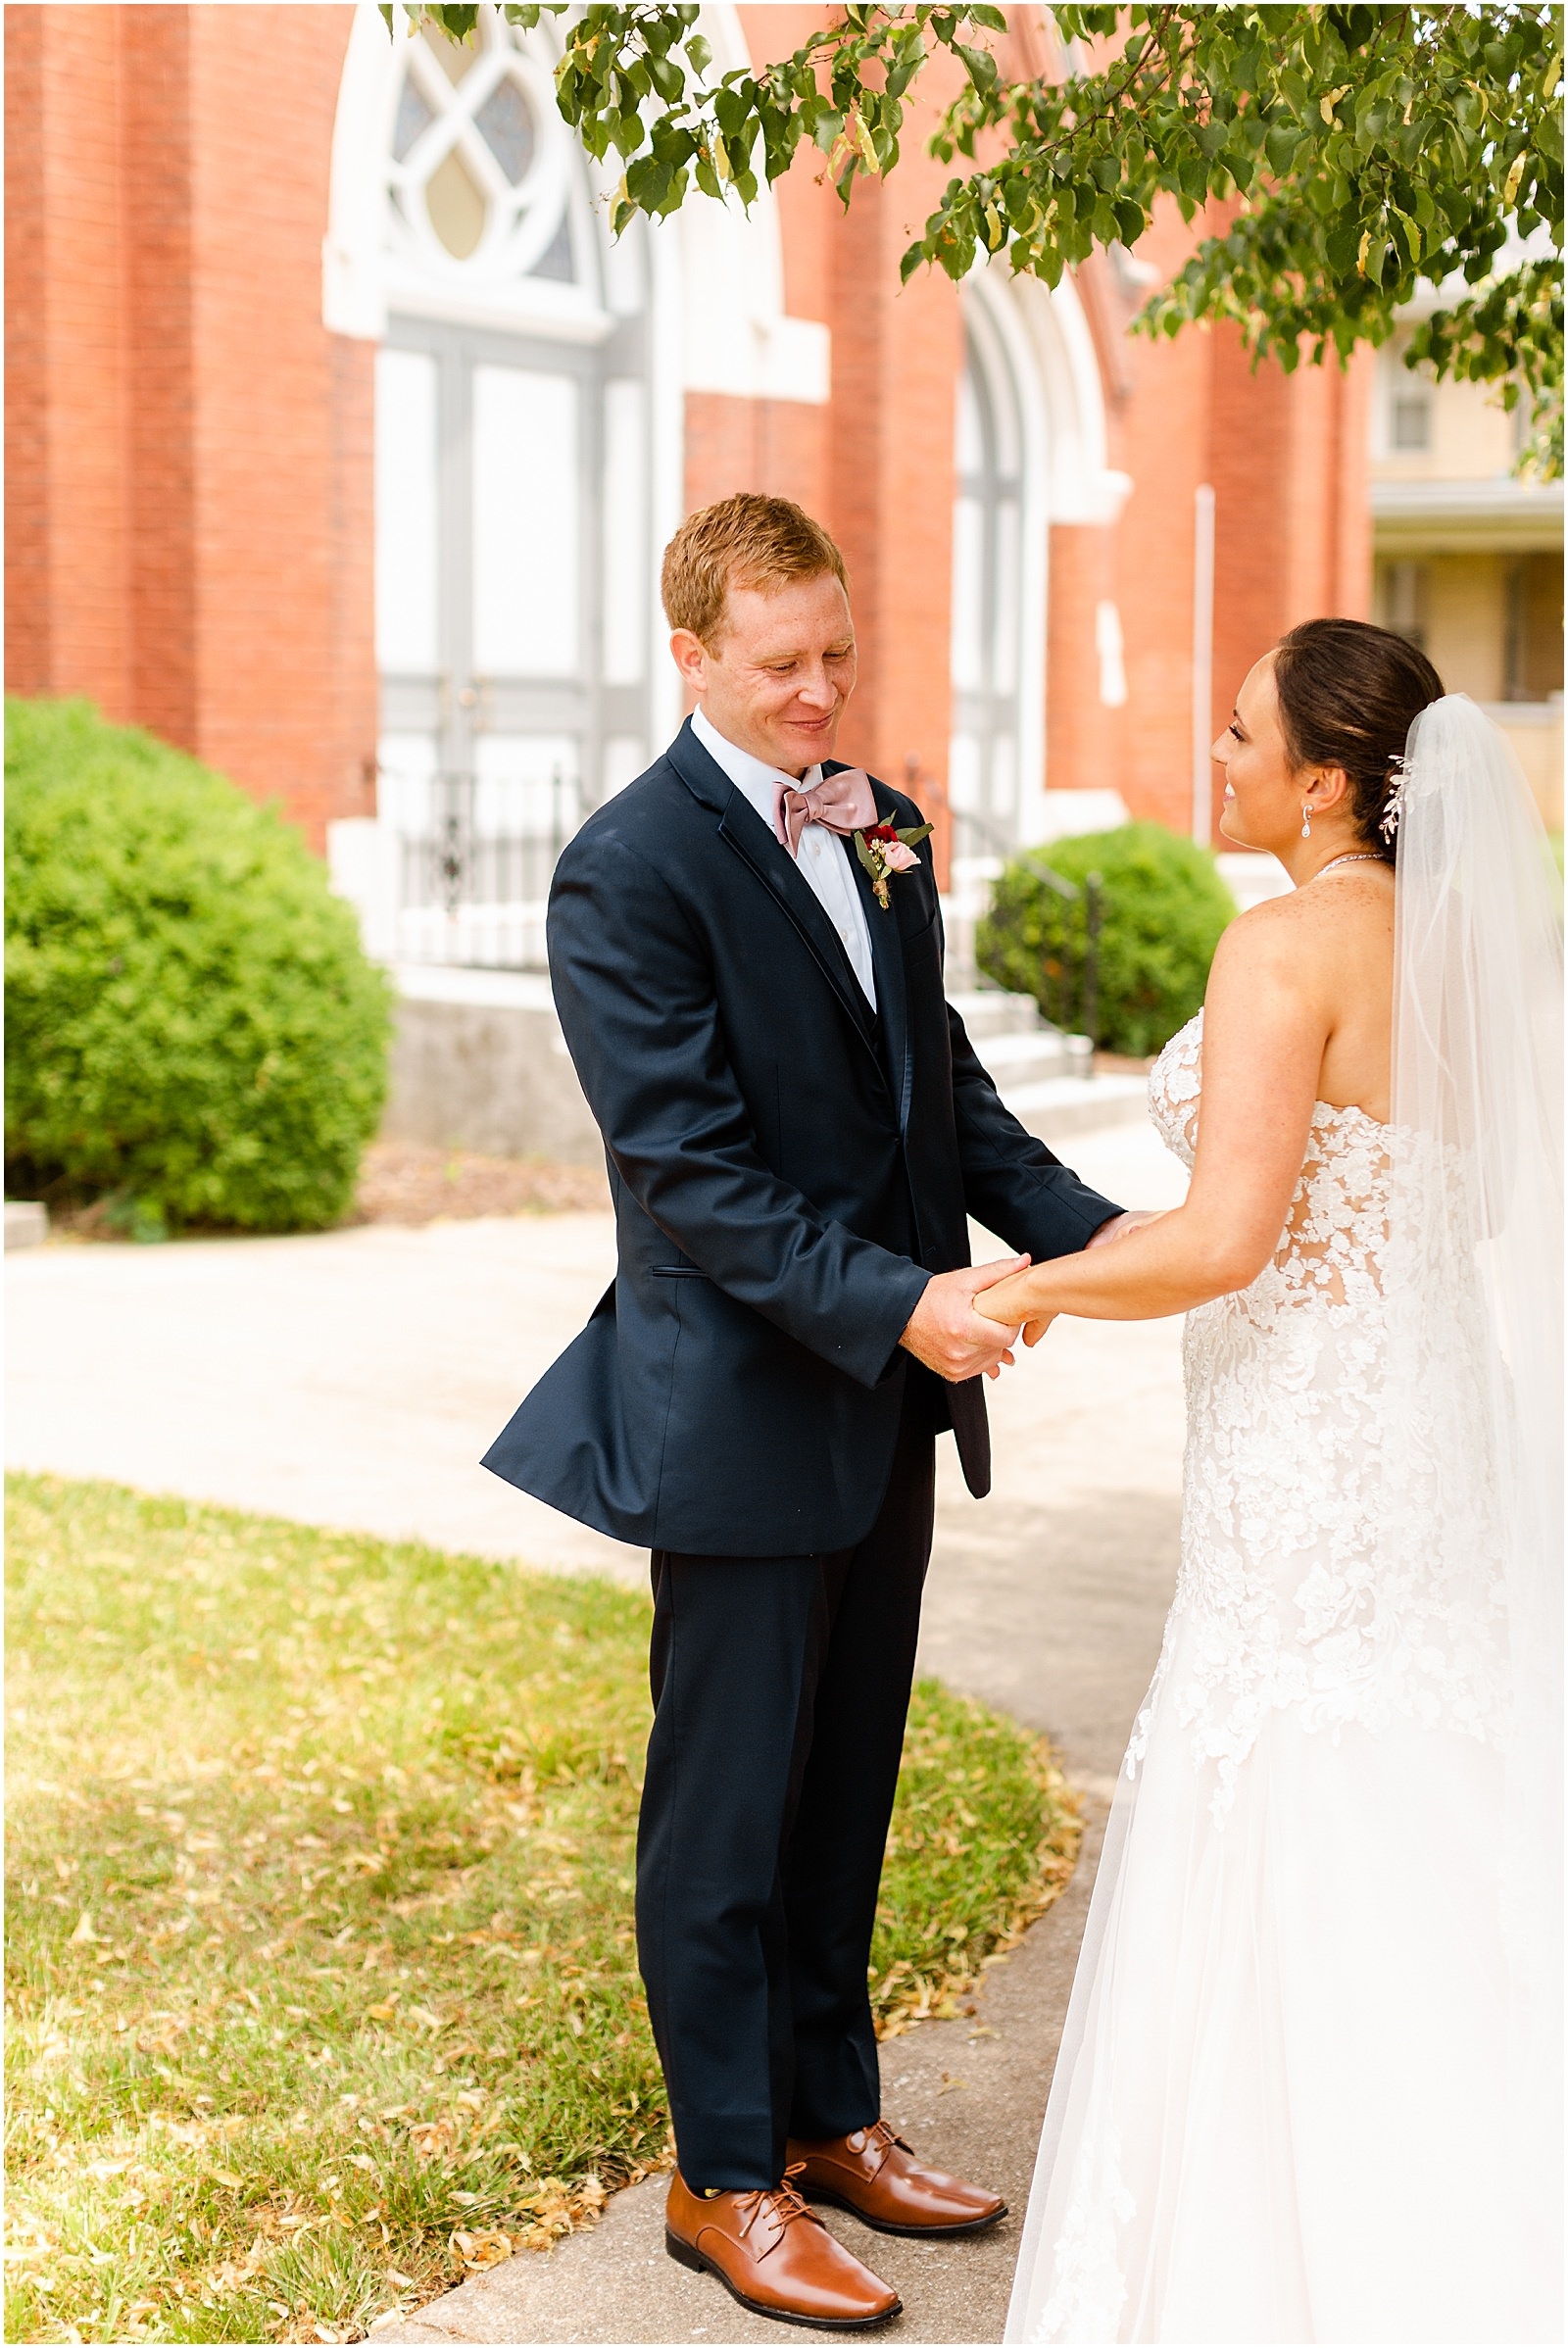 Deidra and Andrew | A Huntingburgh Indiana Wedding Bret and Brandie | Evansville Photographers | @bretandbrandie-0047.jpg